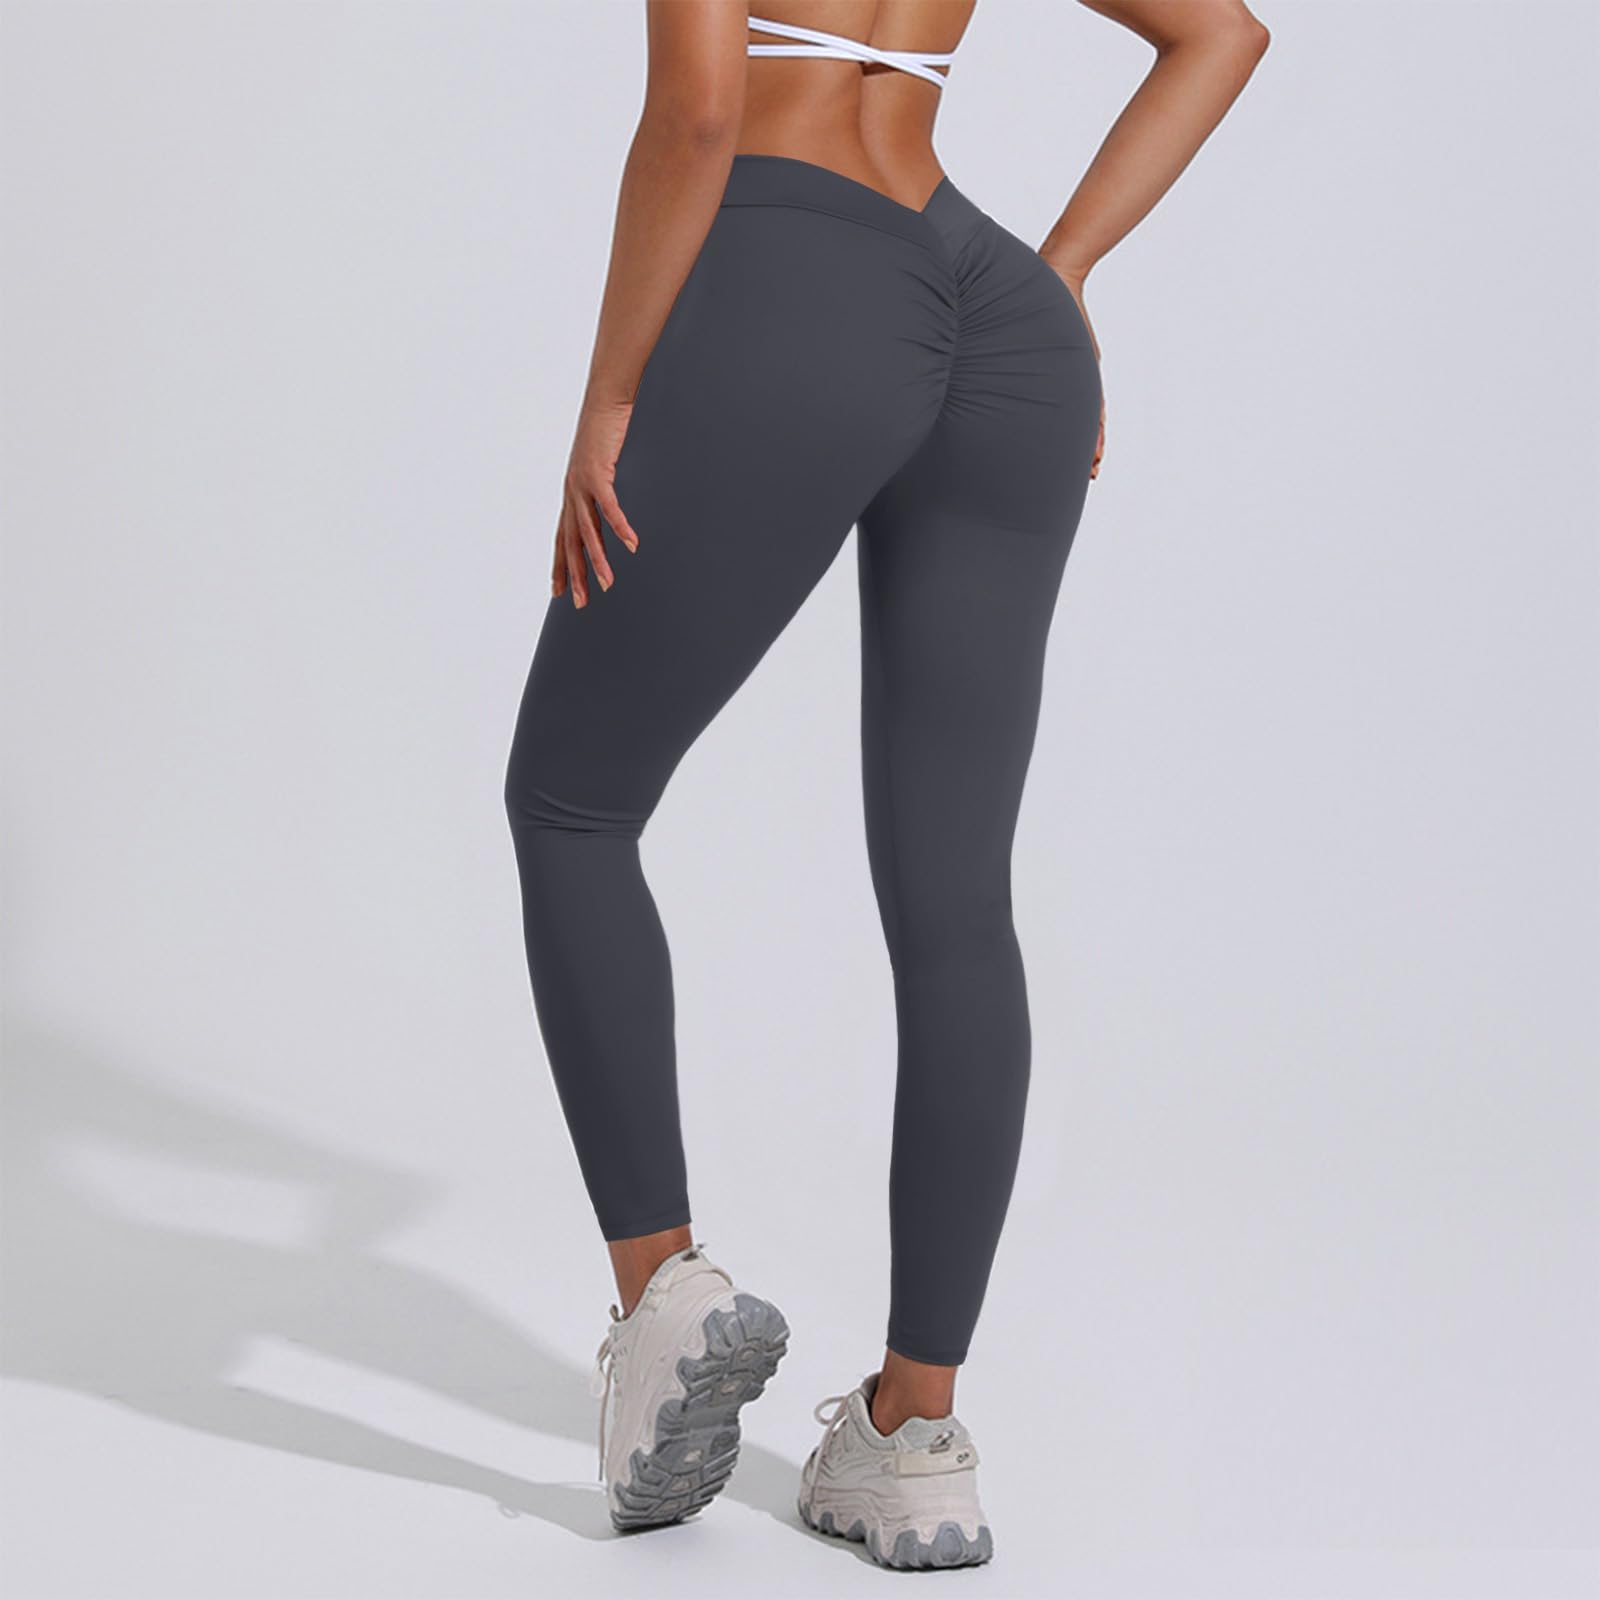 Vega V Workout Leggings - Large  Waist workout, Workout leggings, Workout